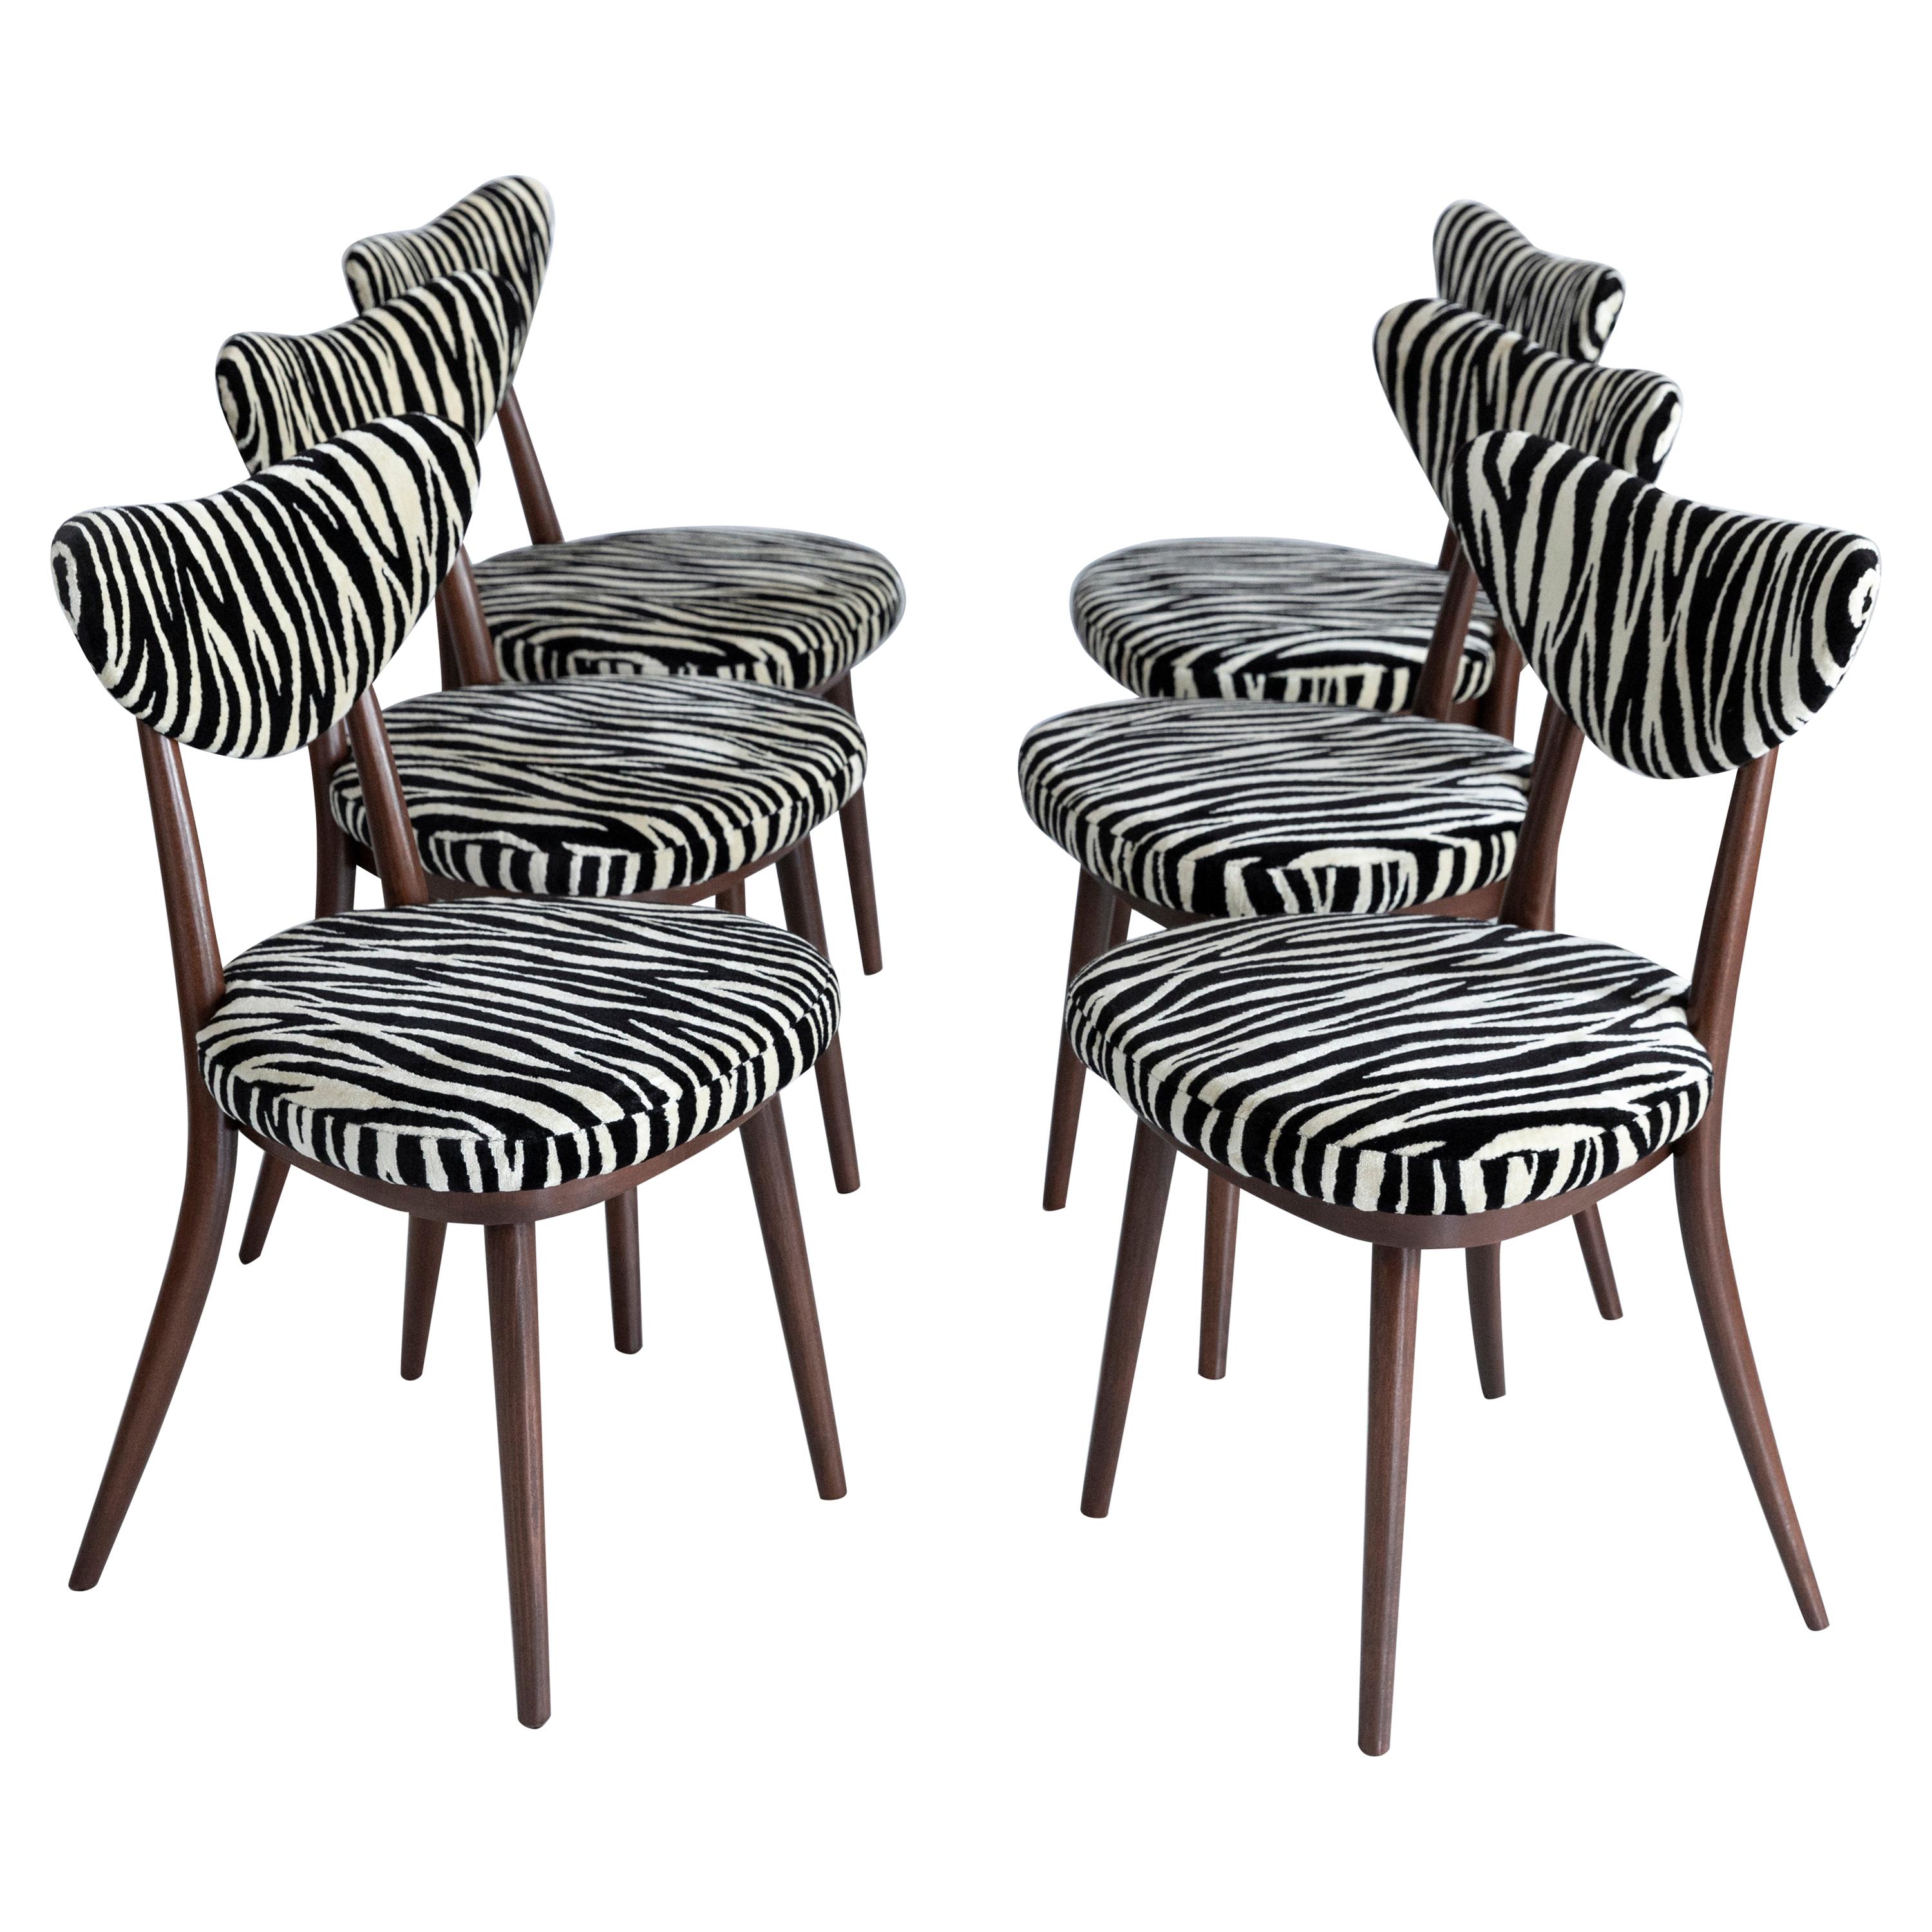 Set Midcentury Zebra Black White Heart Chairs, Hollywood Regency, Poland, 1960s For Sale